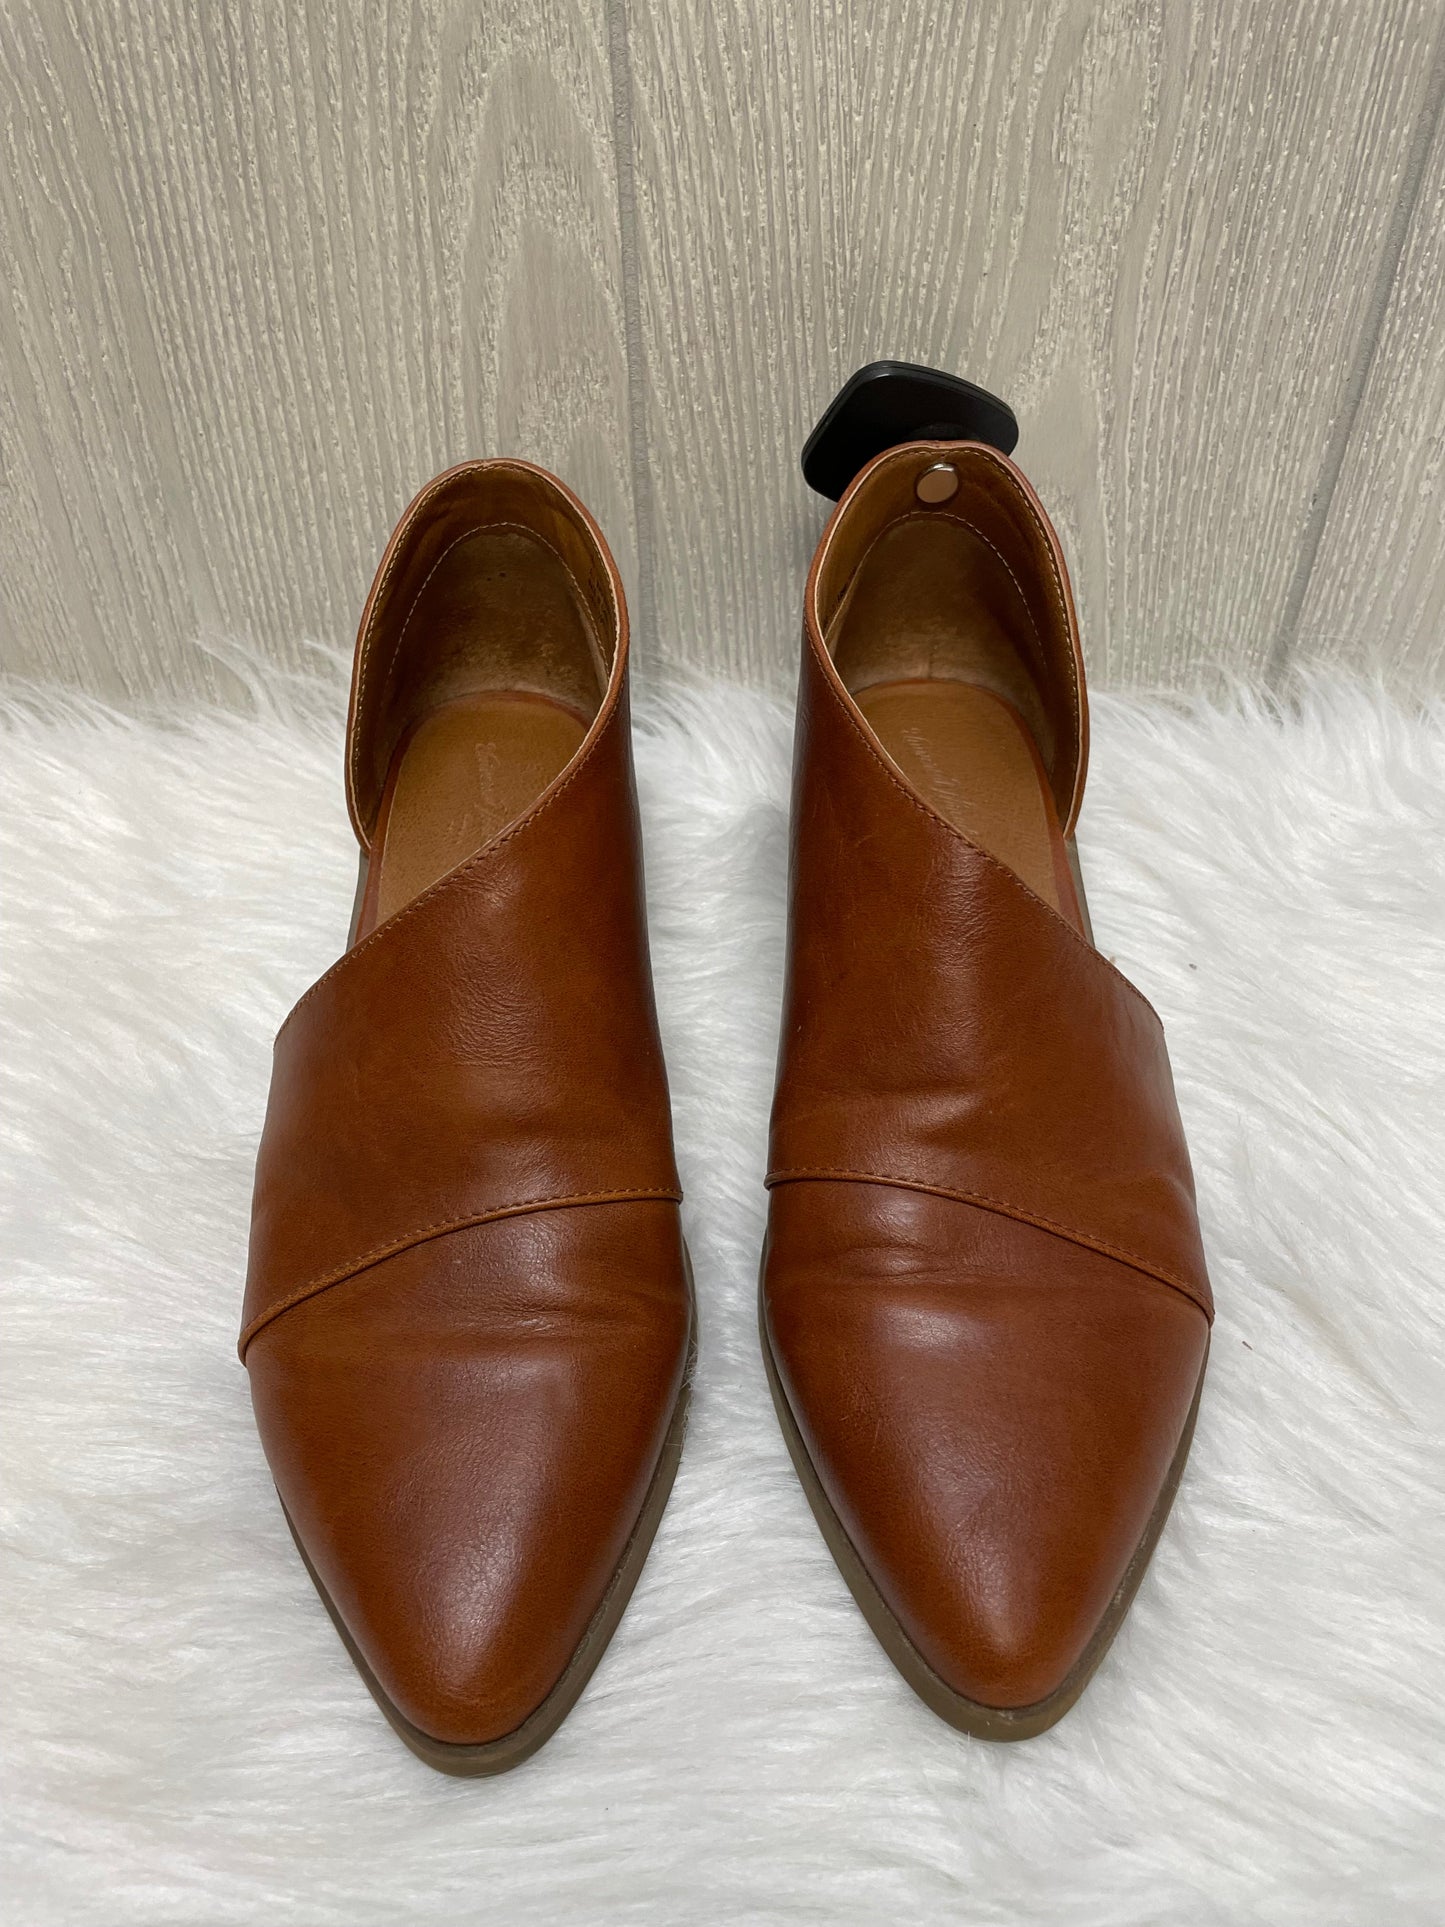 Brown Shoes Heels Block Universal Thread, Size 7.5